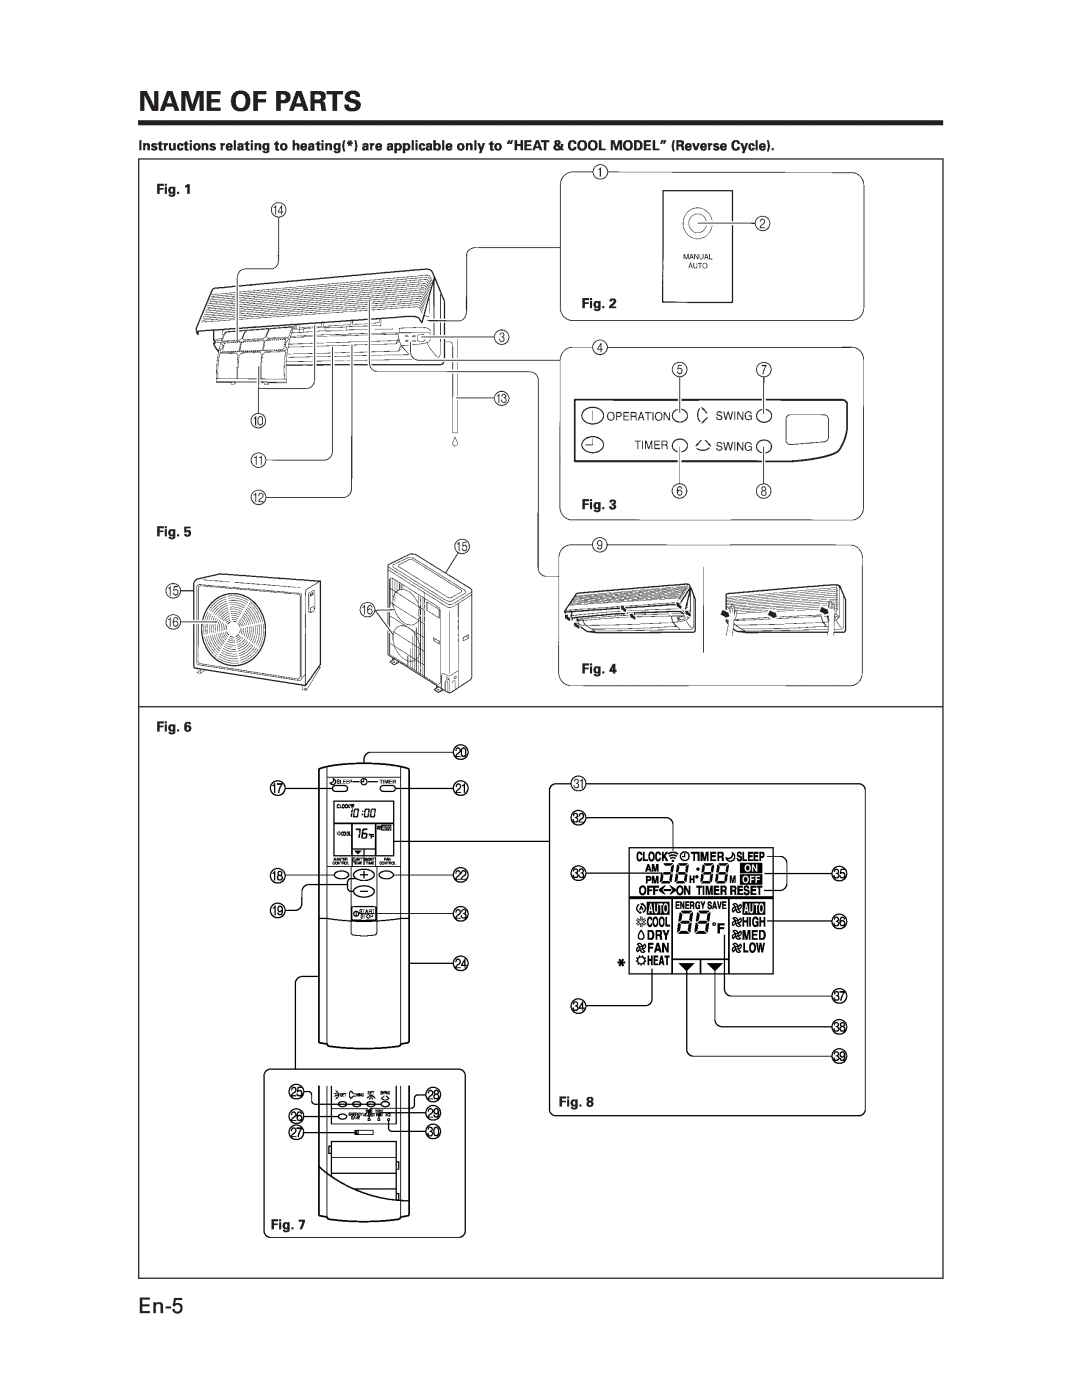 Fujitsu ASU18T, AOU36T, Room Air Conditioner Multi Split Type (3 rooms) operation manual Name Of Parts, En-5 